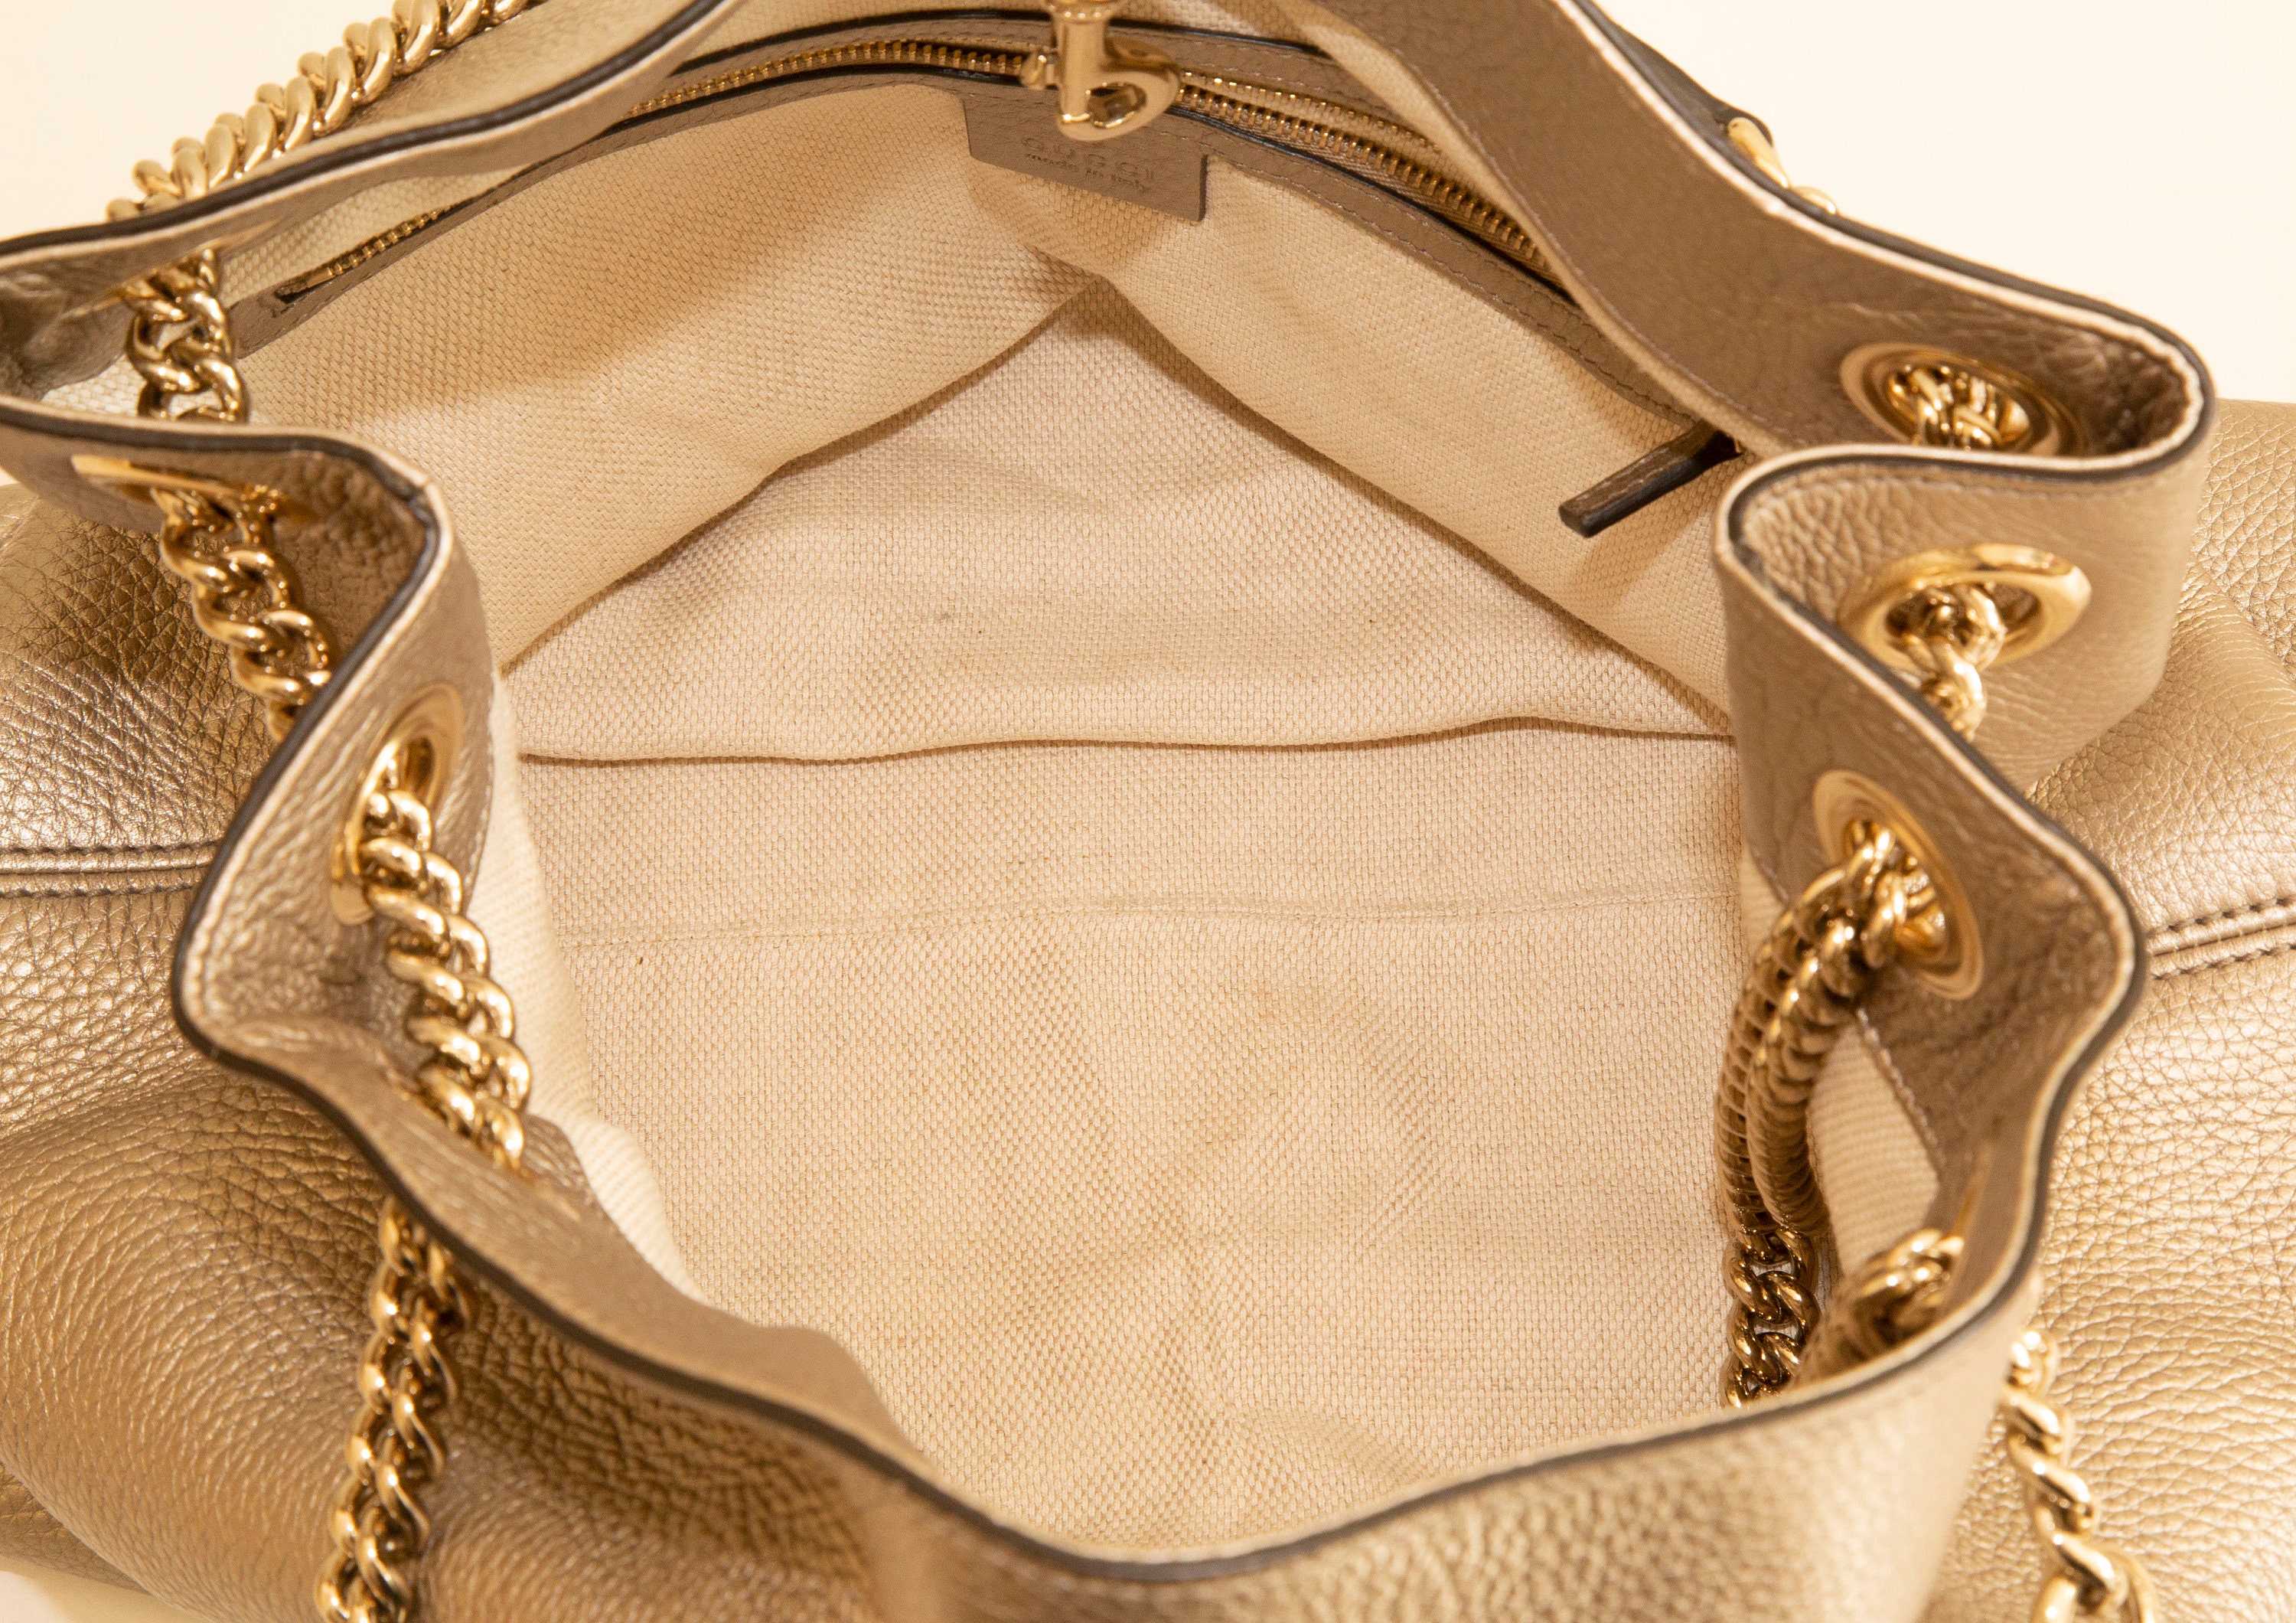 Gucci Soho Tote / Chain Shoulder Bag Metallic Champagne 